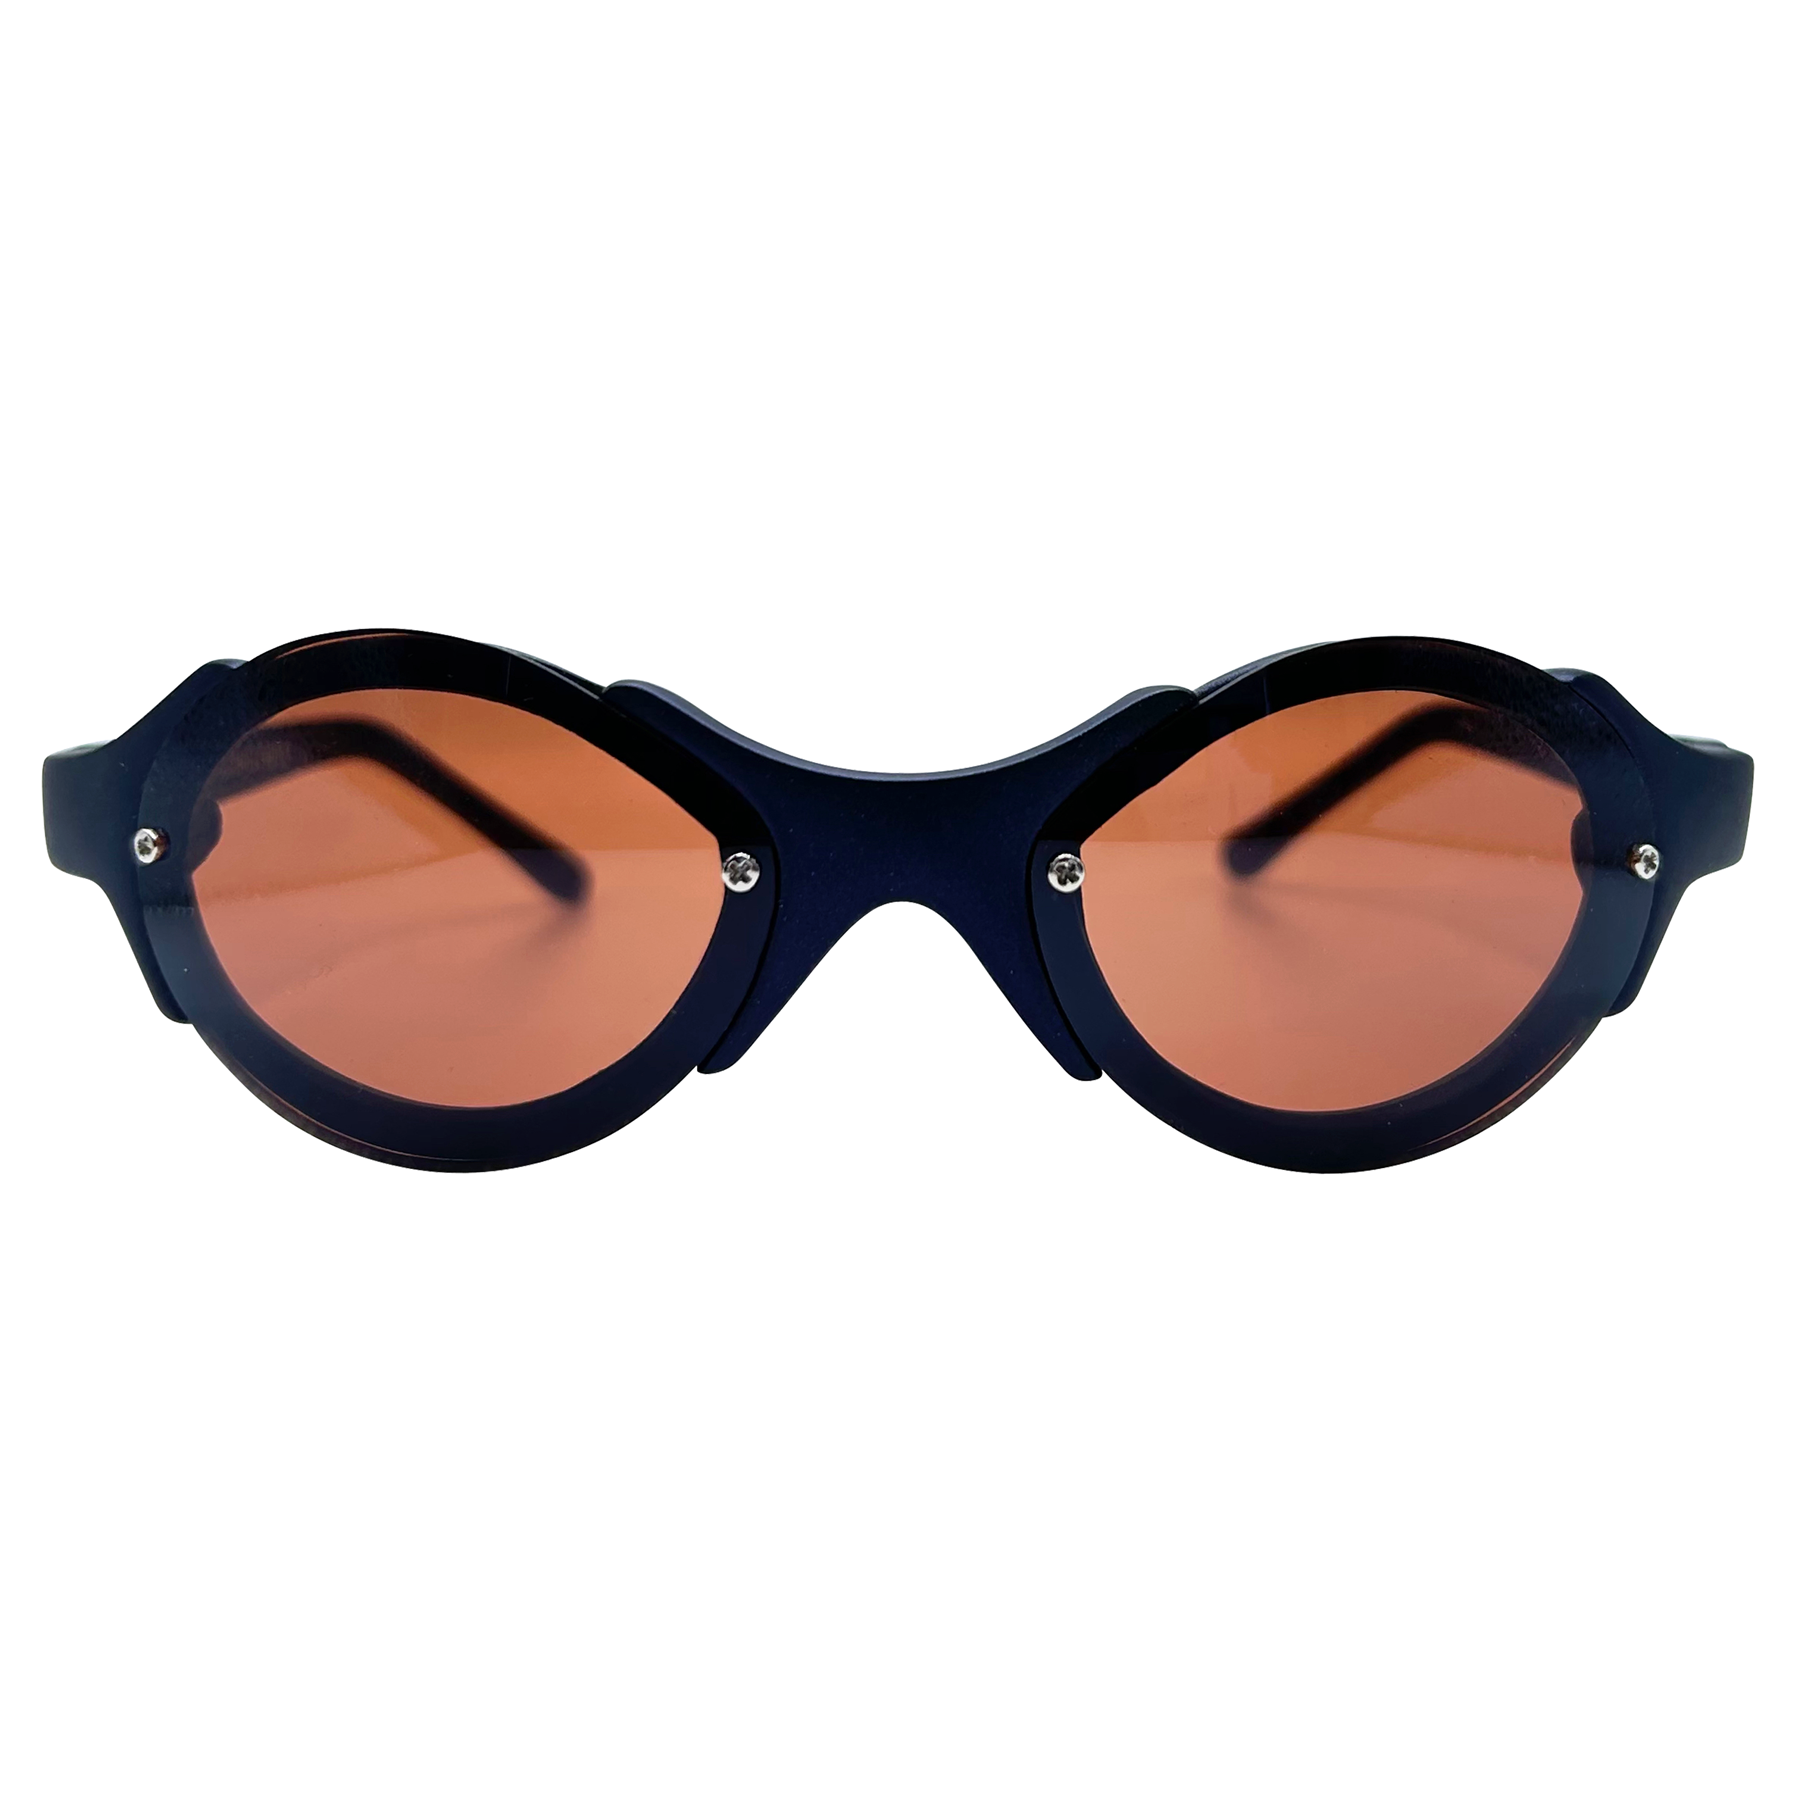 BEEP Micro Round Sports Sunglasses | Blue-Blocker | Day Driving